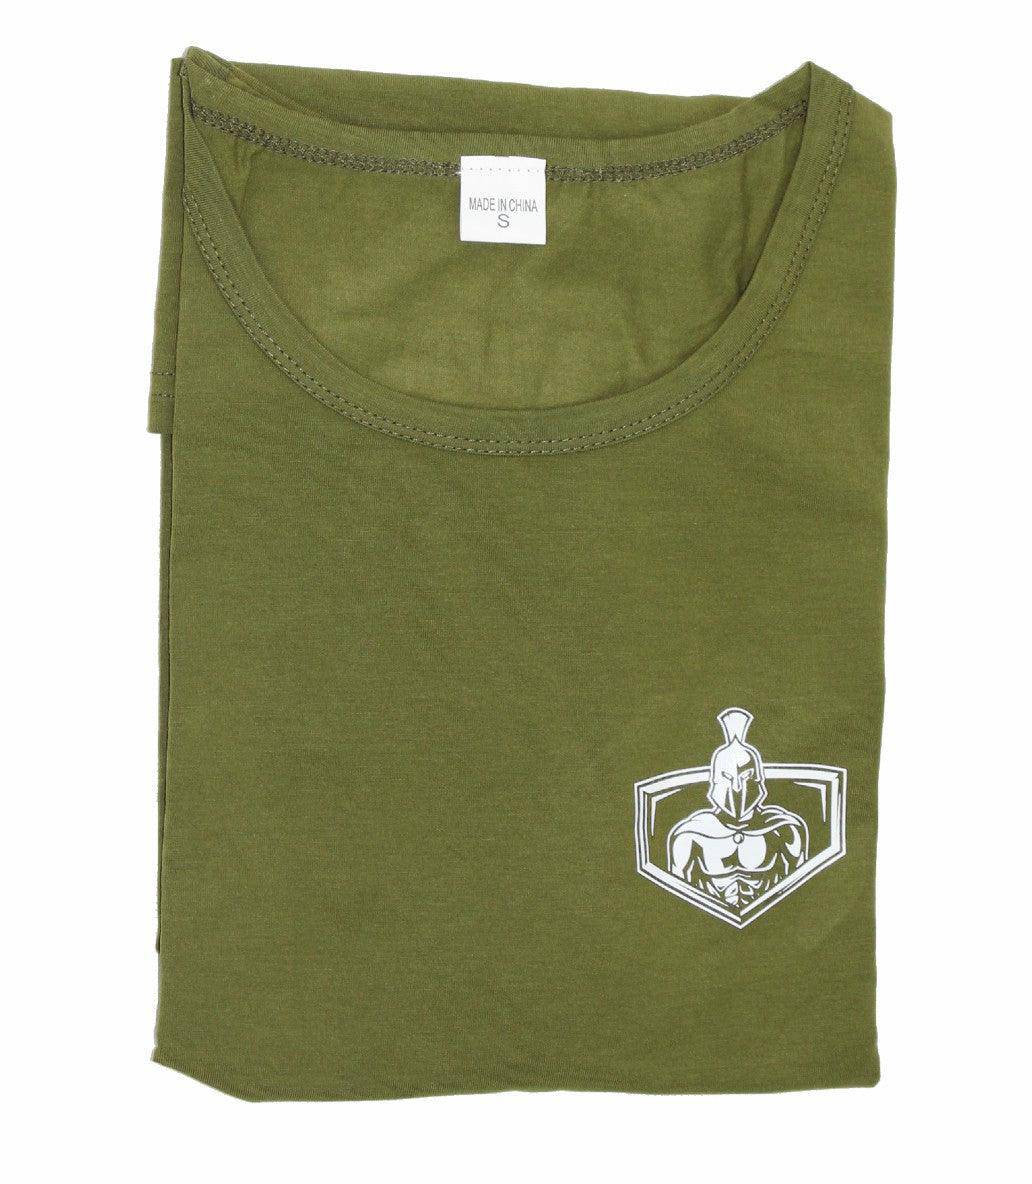 Arrival Fitness T-shirt - Army Green - Gymlegion